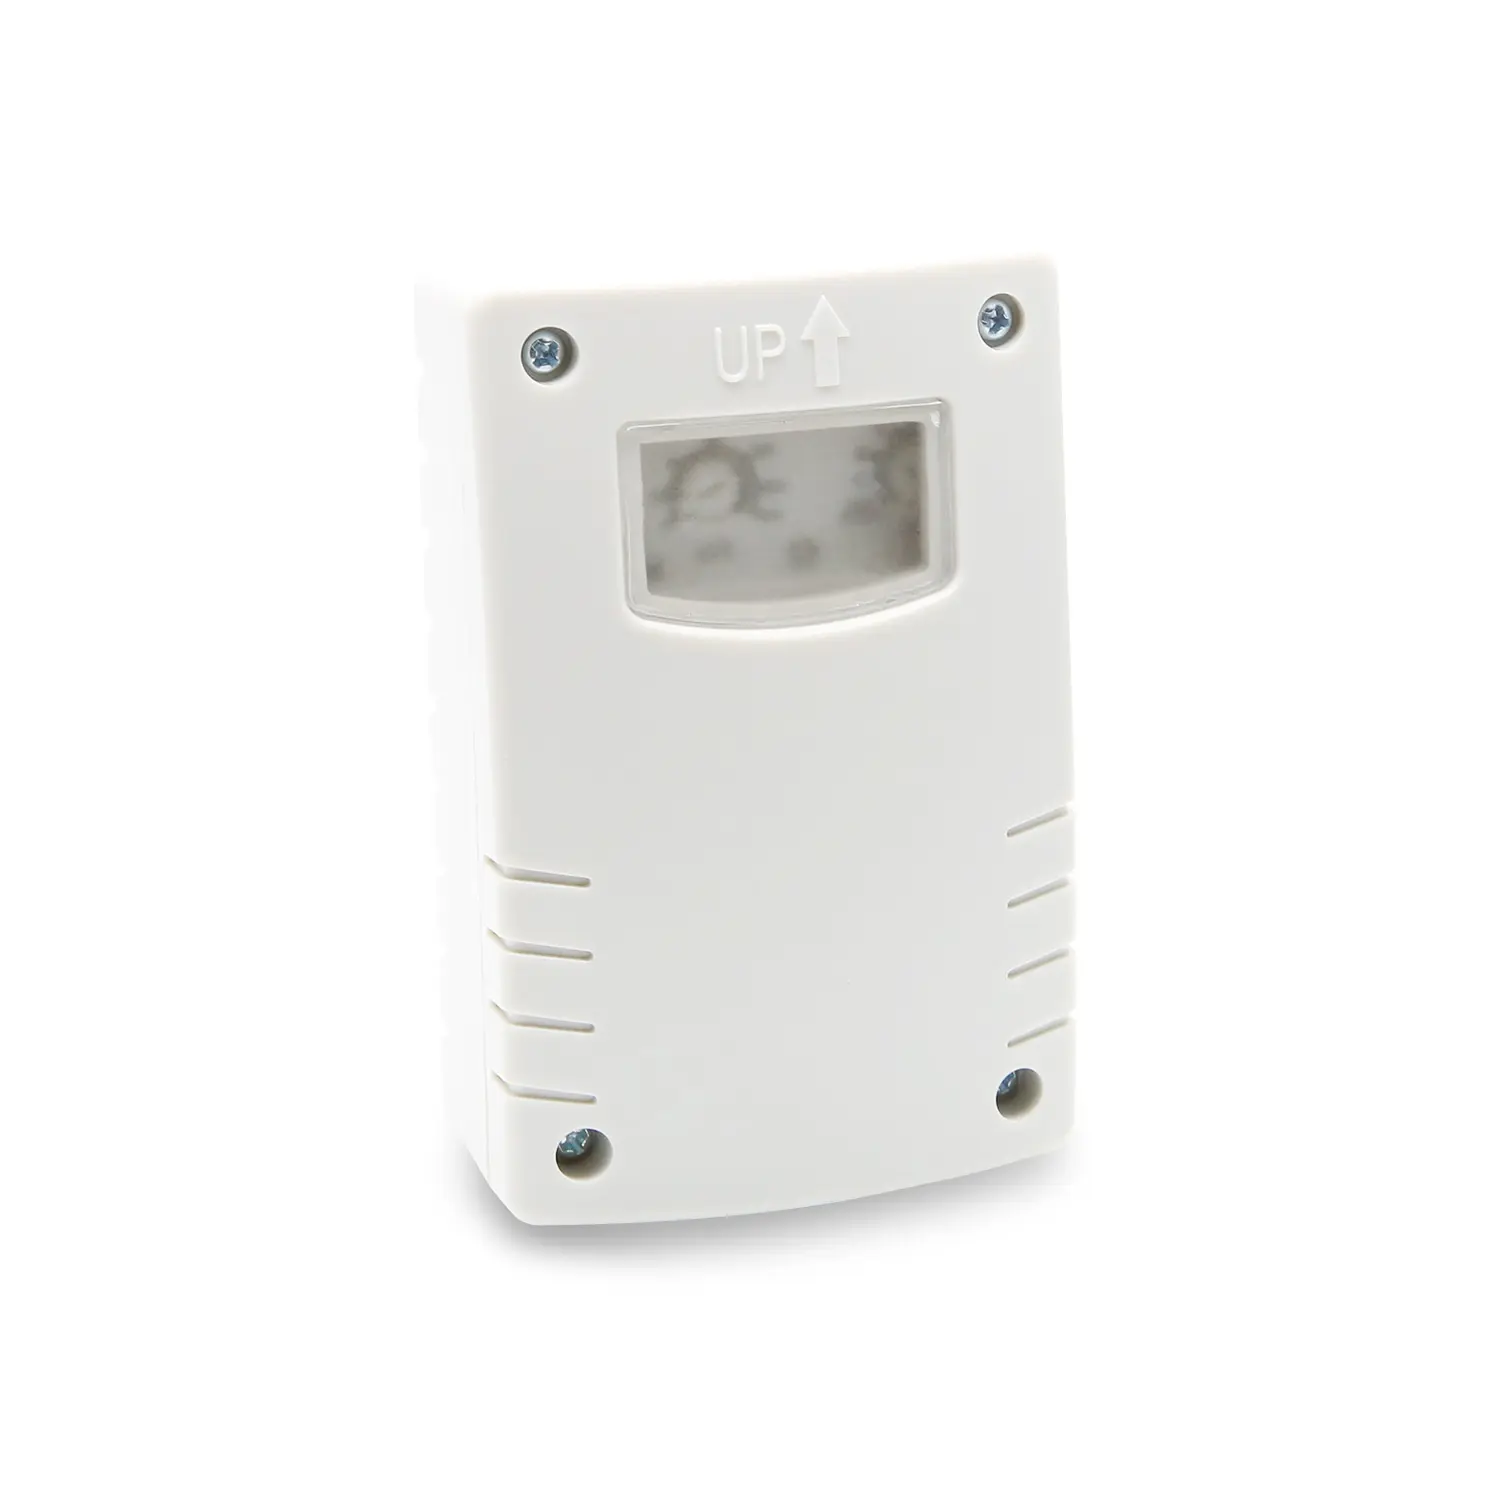 BS300 220v-240v Dusk to Dawn Photocell Sensor for Street Lighting Motion Sensor Smart Control Have Stock 6A 50hz <93%RH BESTER